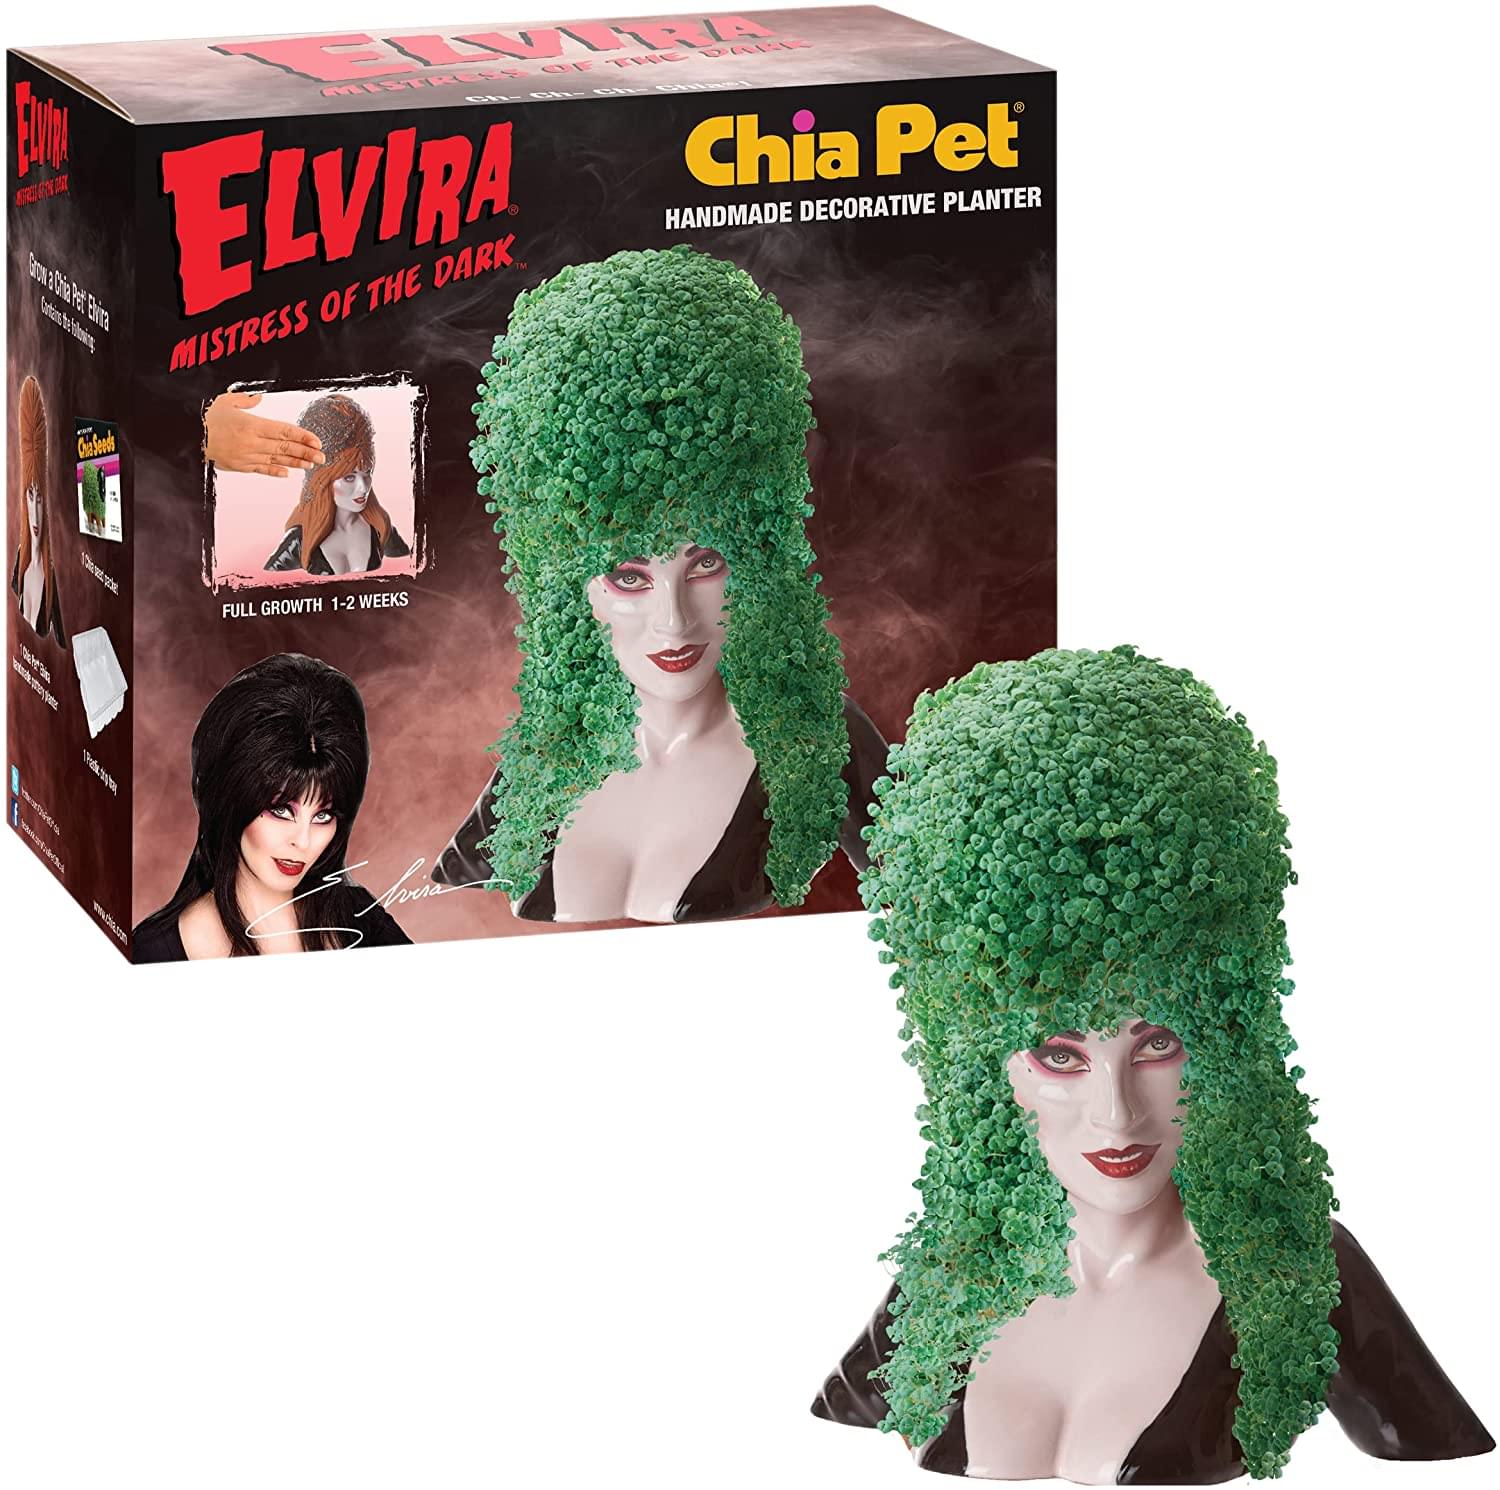 Elvira Mistress of the Dark Chia Pet Decorative Pottery Planter